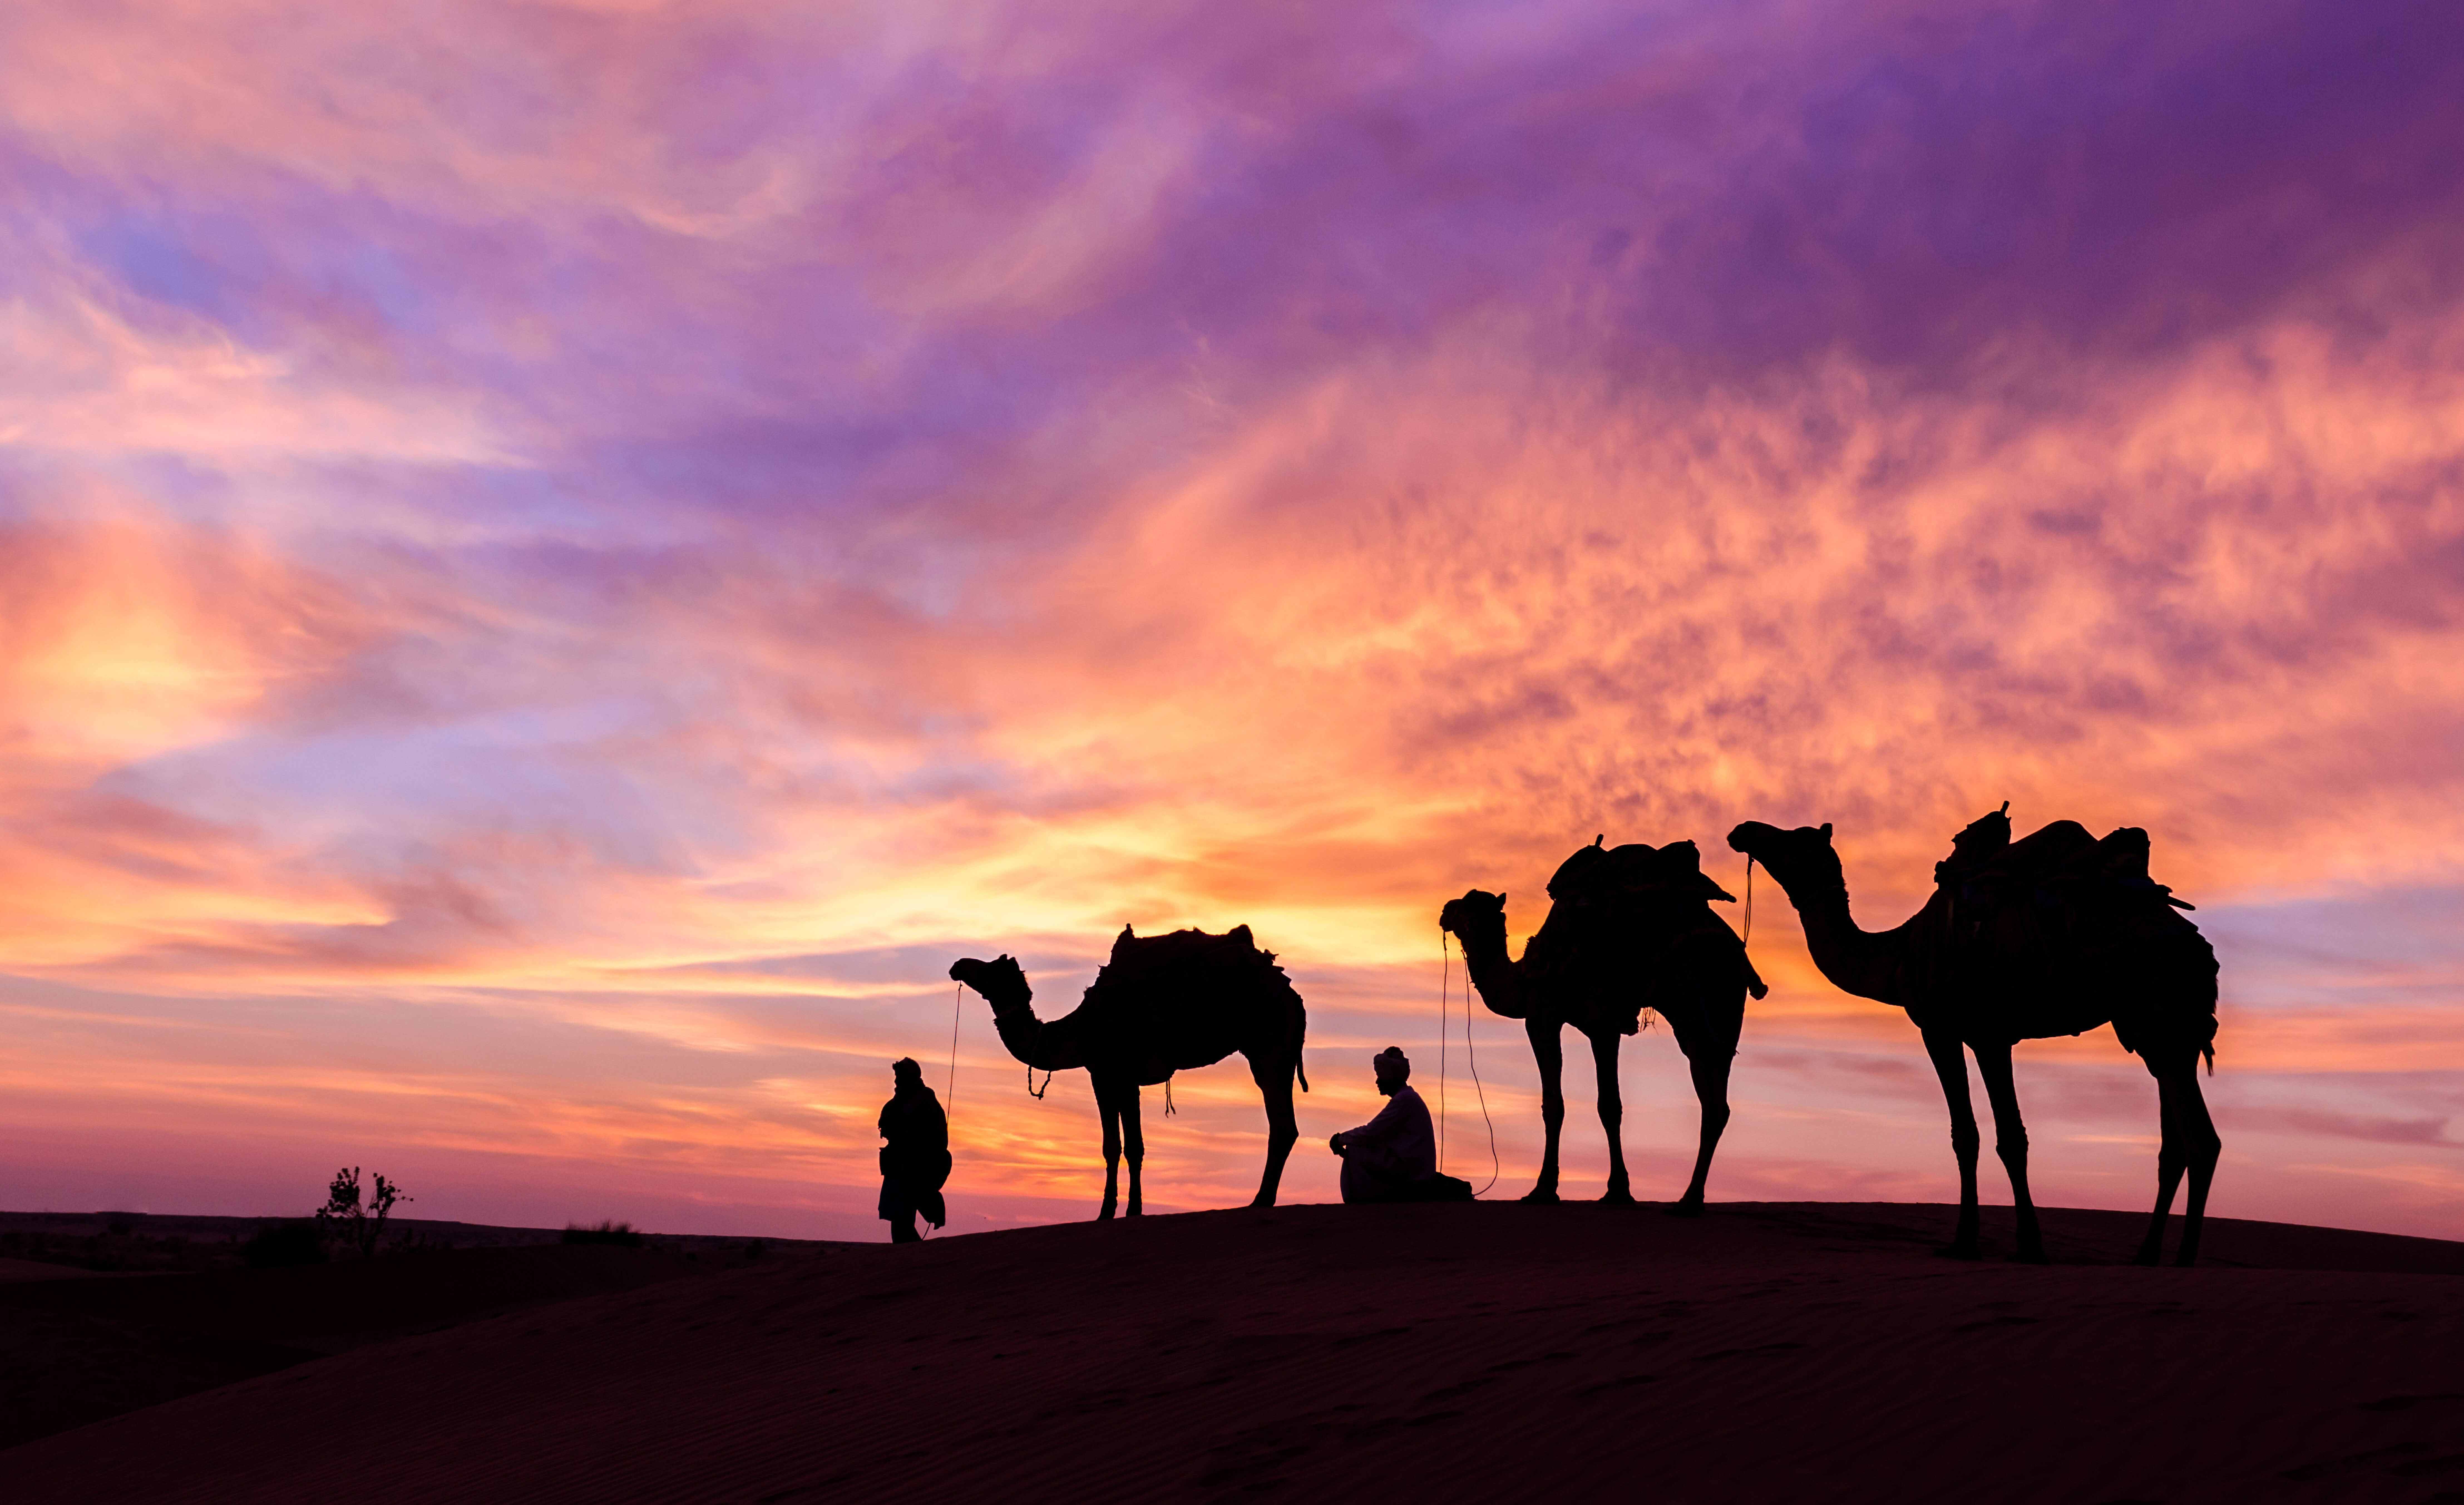 Караван картинка. Караван с верблюдами в пустыне. Караван Аравийской пустыне ОАЭ. Арабы с караваном в пустыне. Караван верблюдов в пустыне.